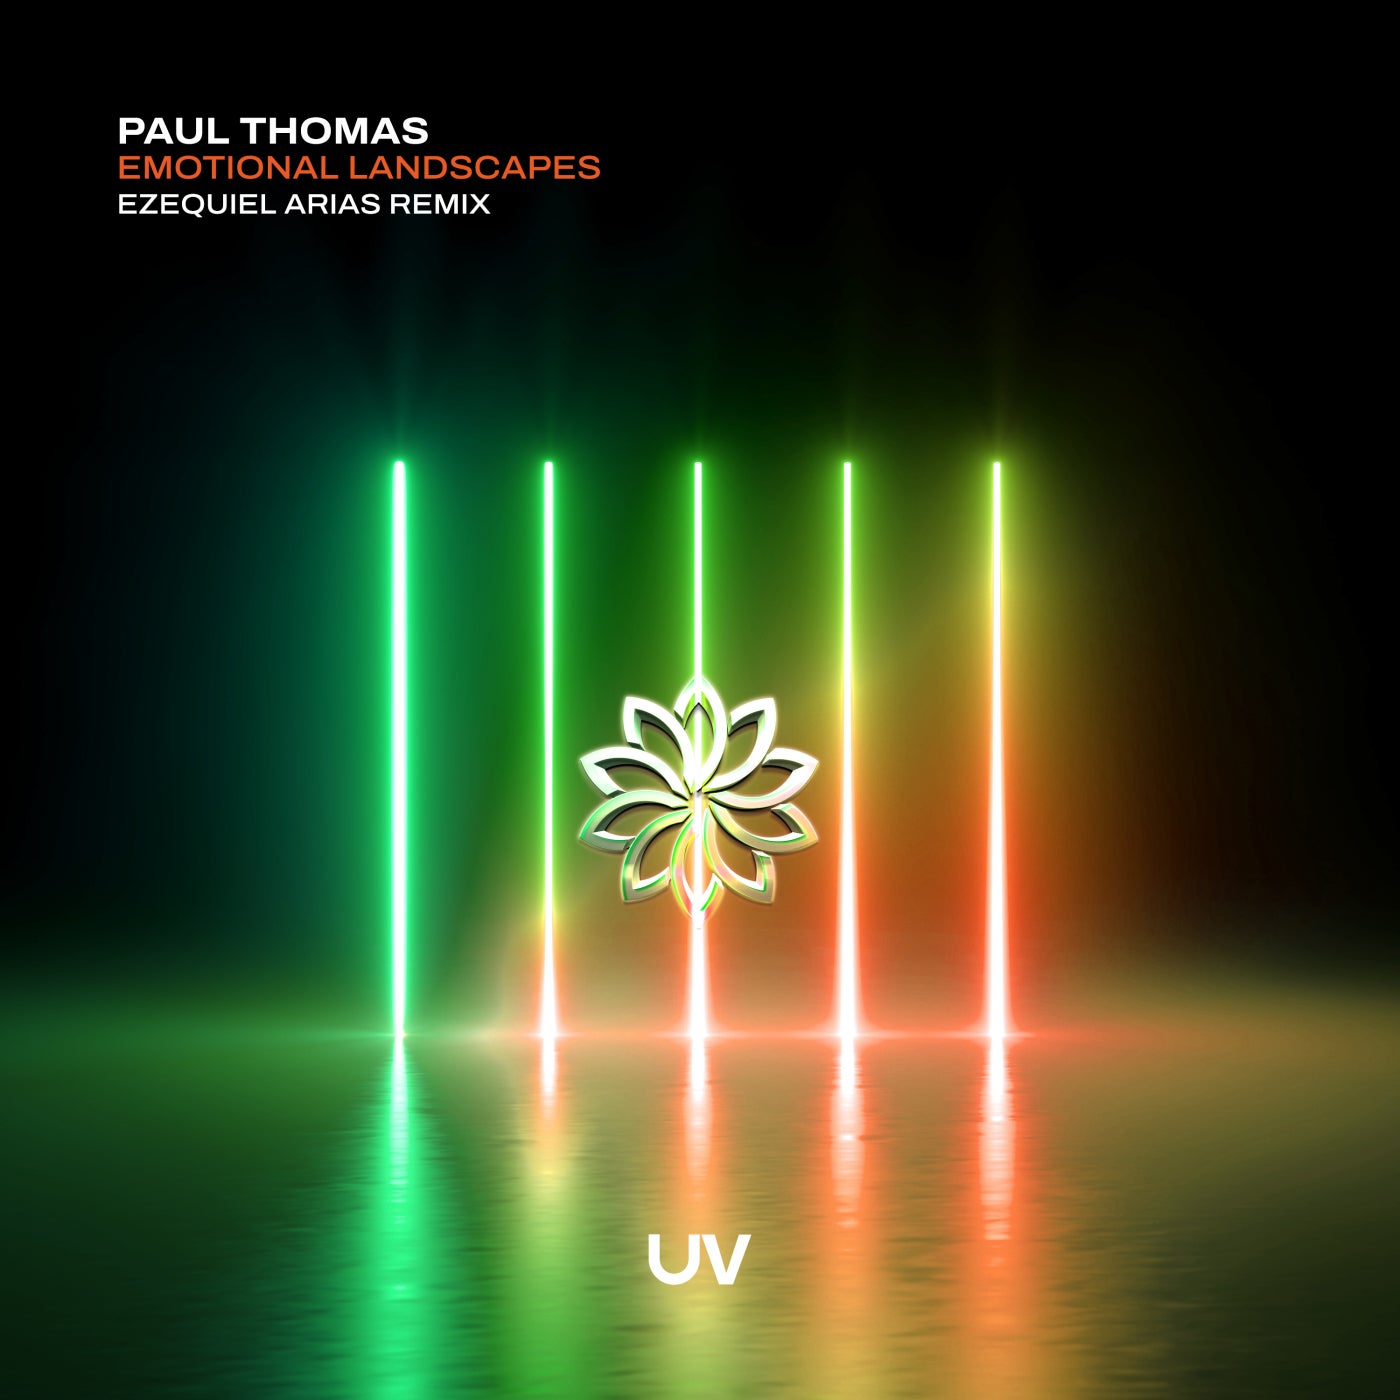 image cover: Paul Thomas - Emotional Landscapes (Ezequiel Arias Remix) on UV